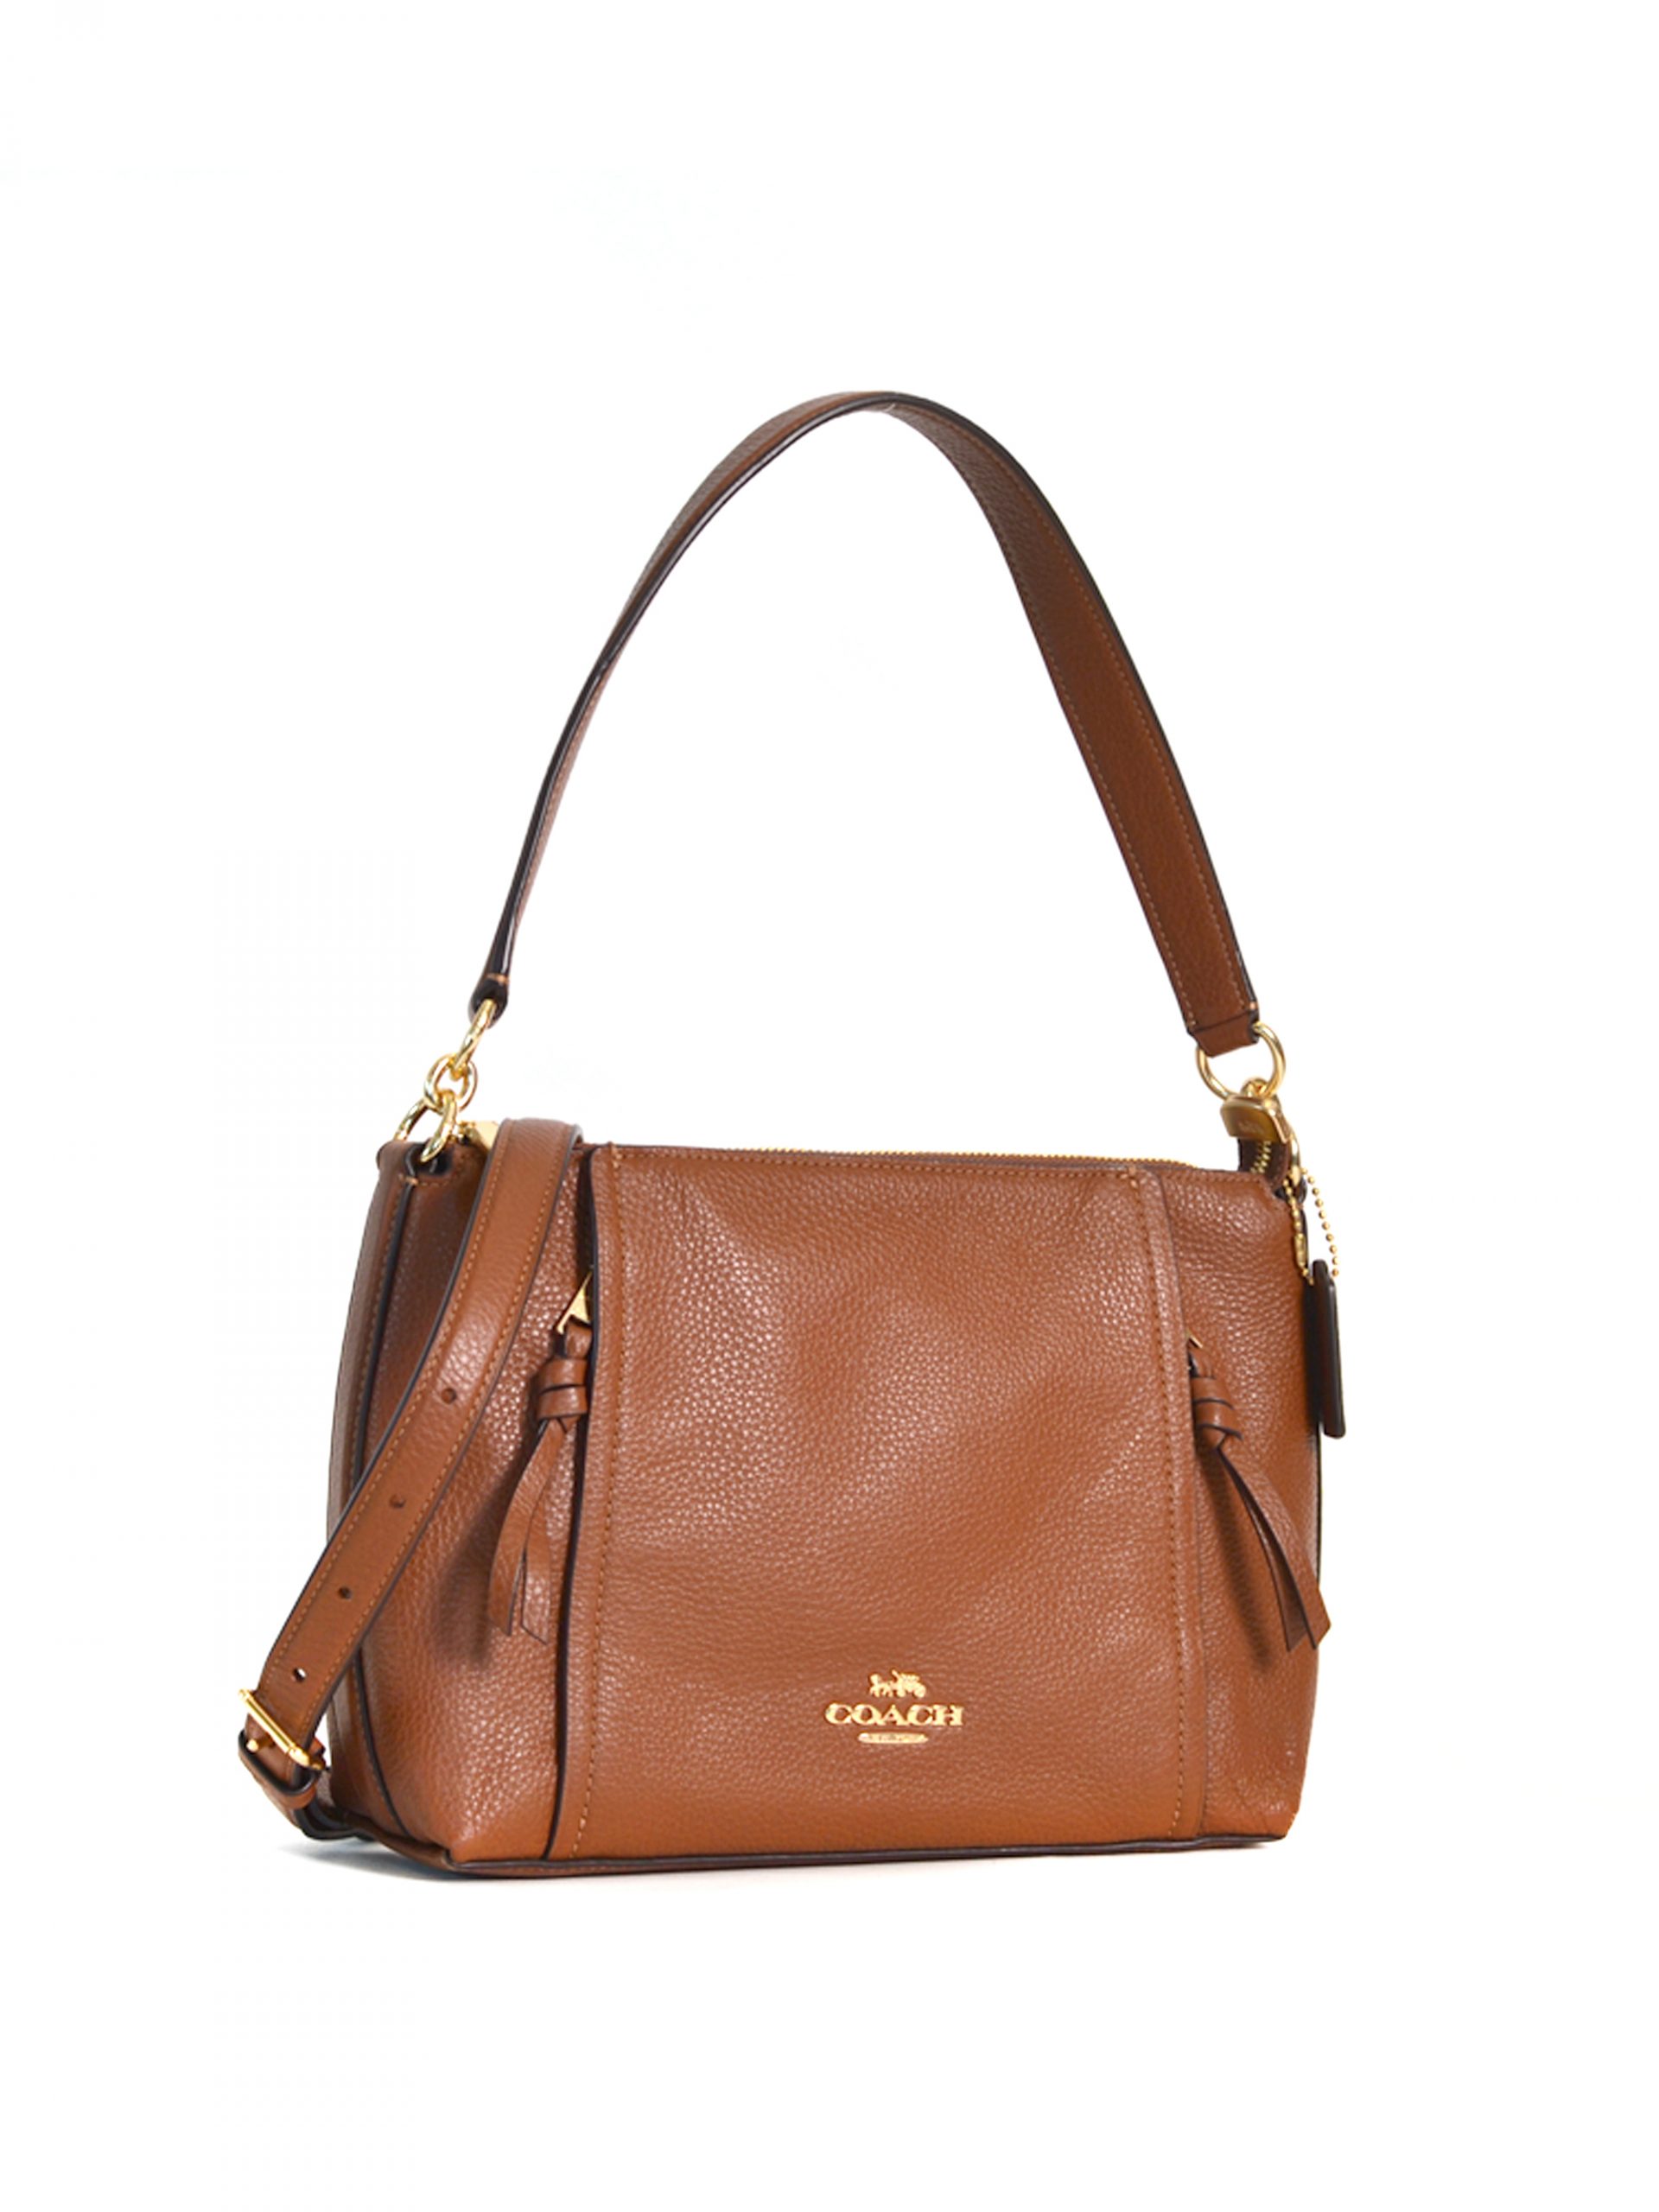 Coach Small Brown Purse Bag | Brown purses, Big purses, Bags